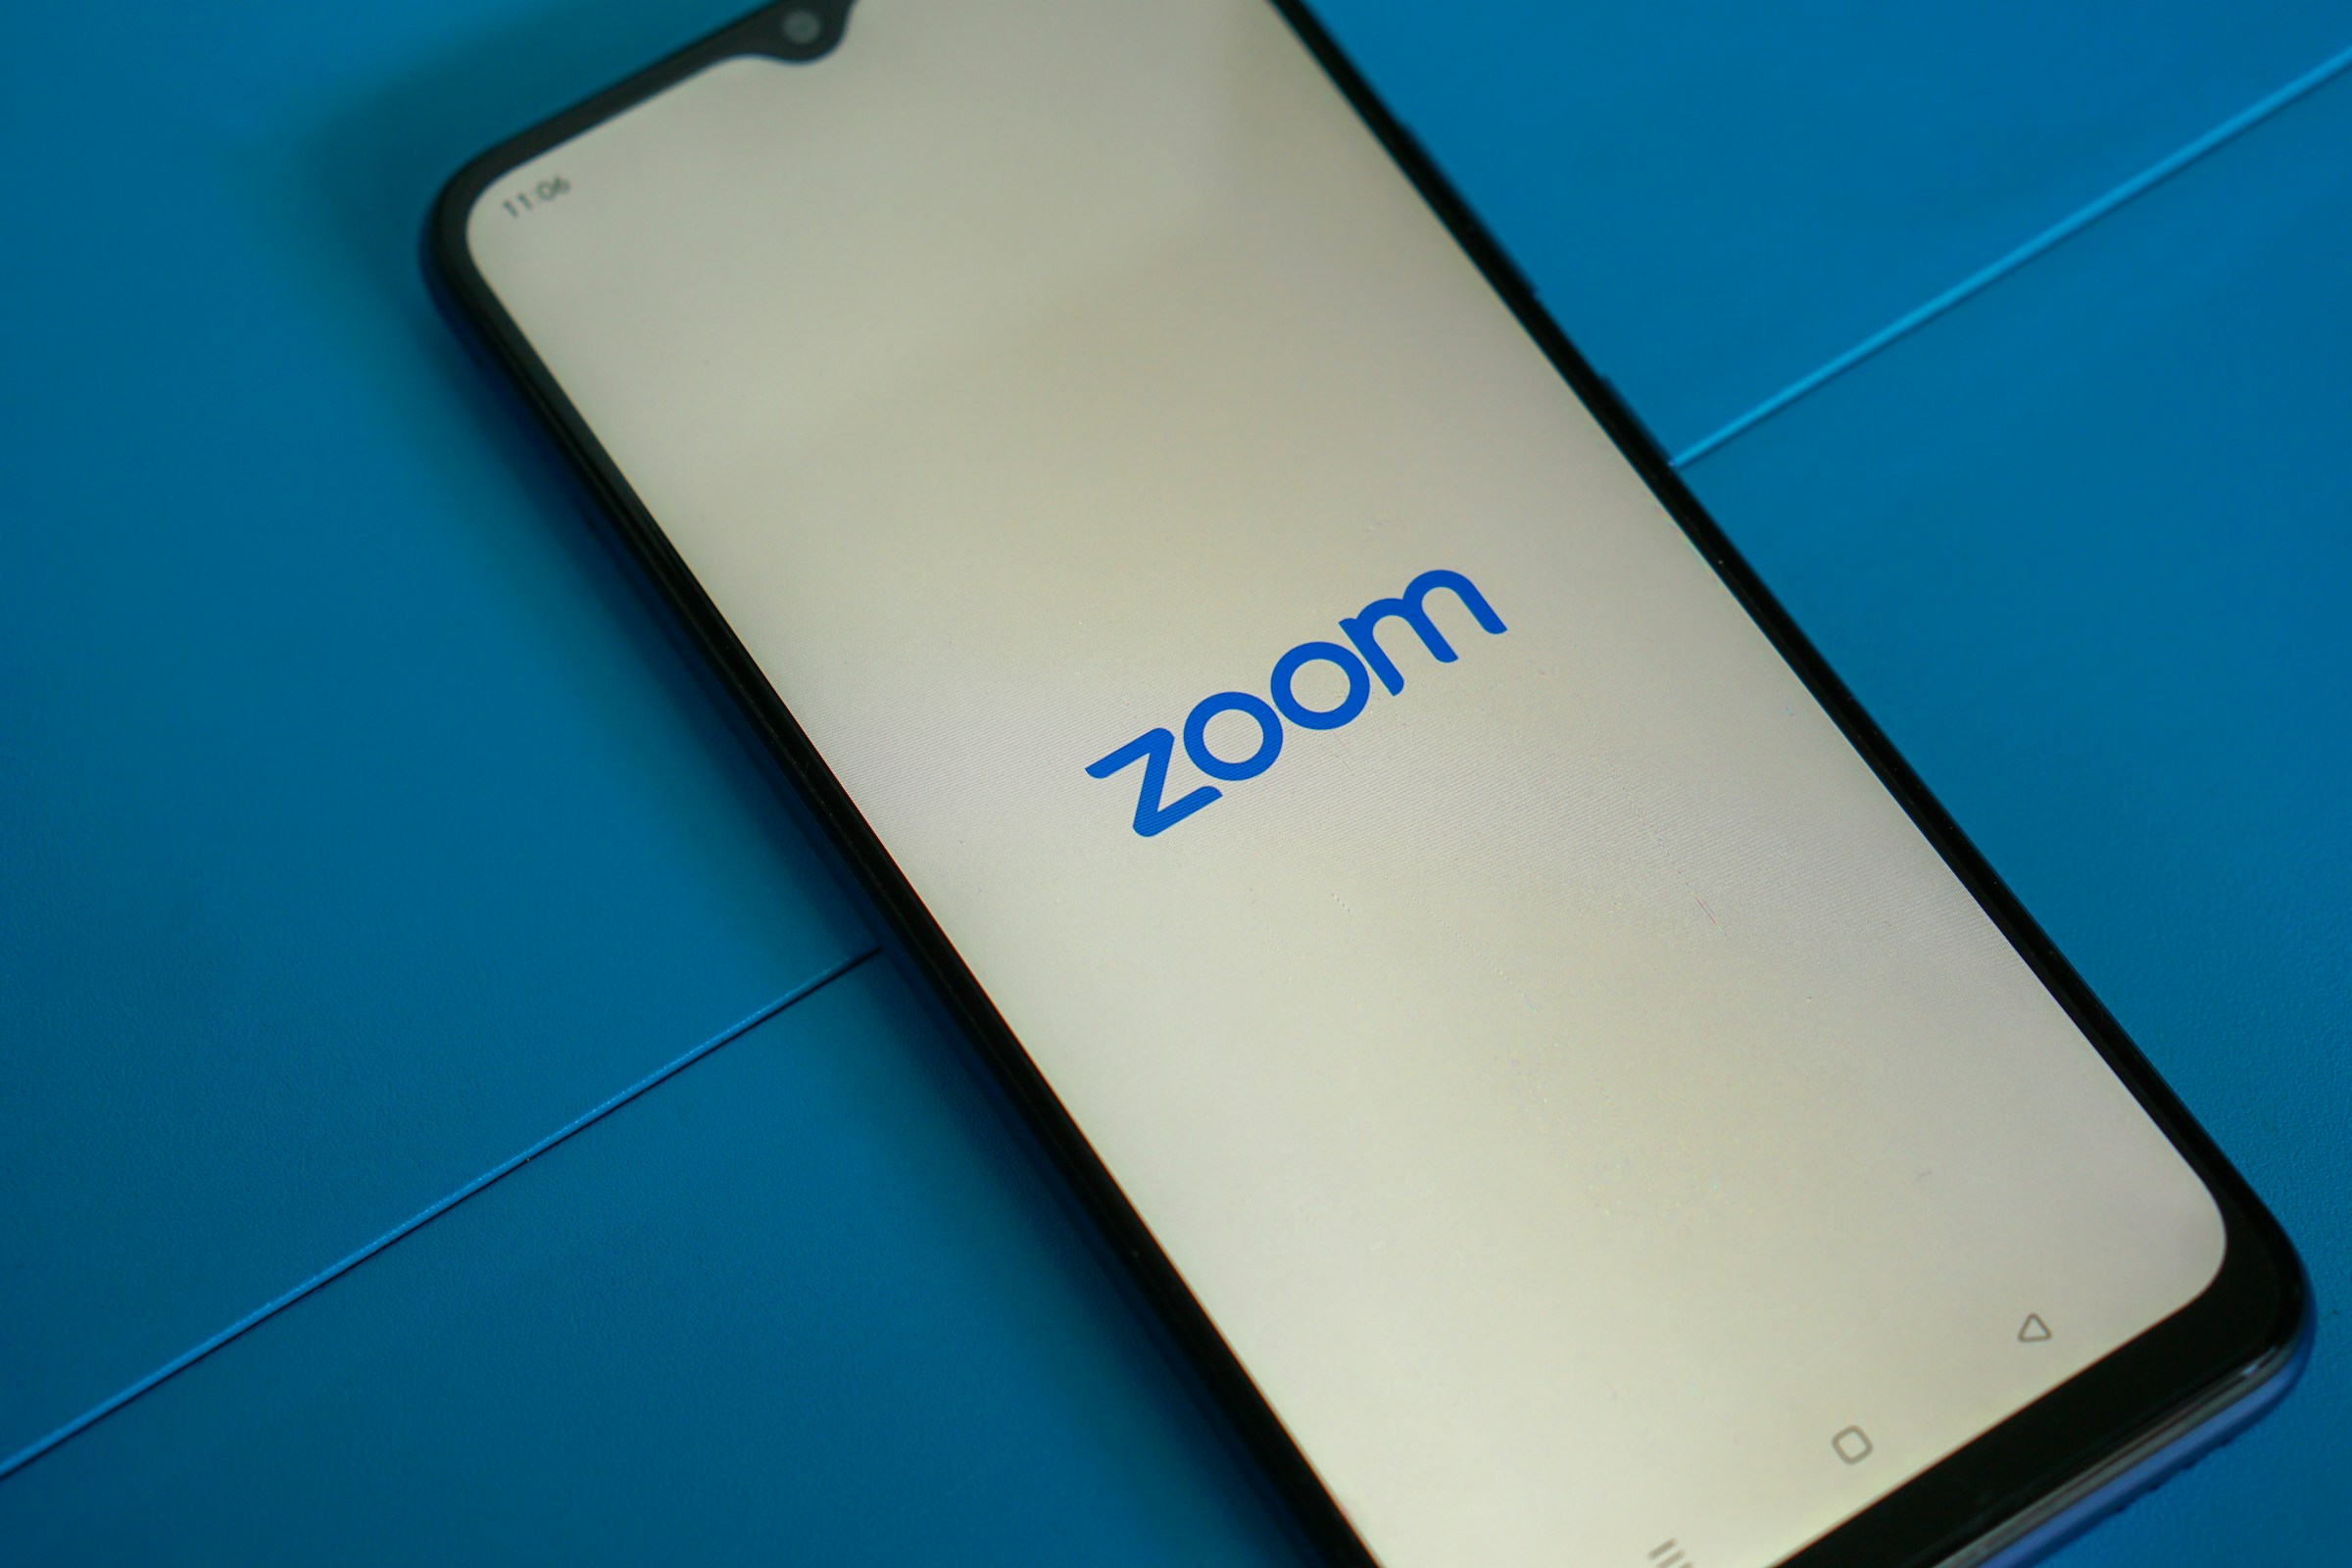 Zoom app in mobile phone